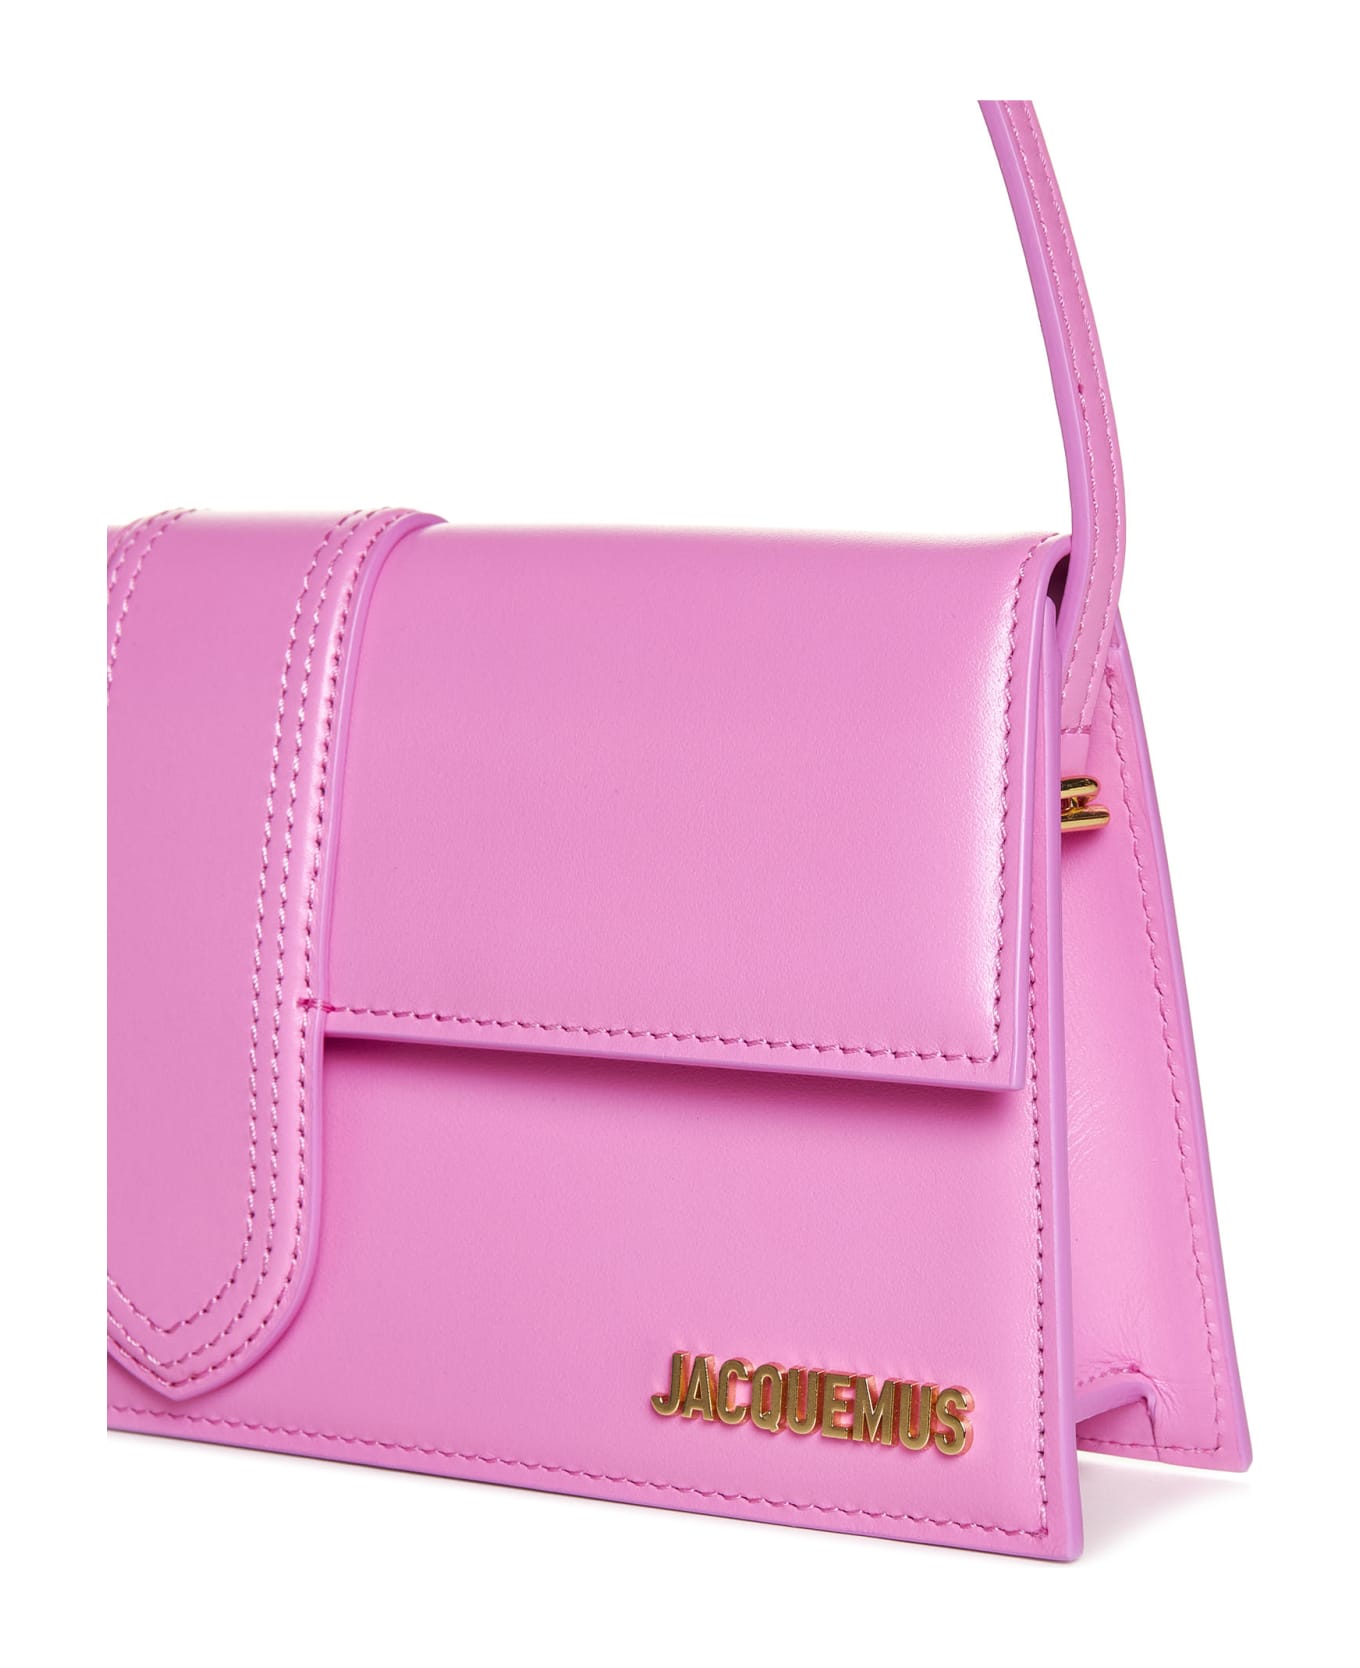 Jacquemus Le Bambino Long Bag - Neon pink